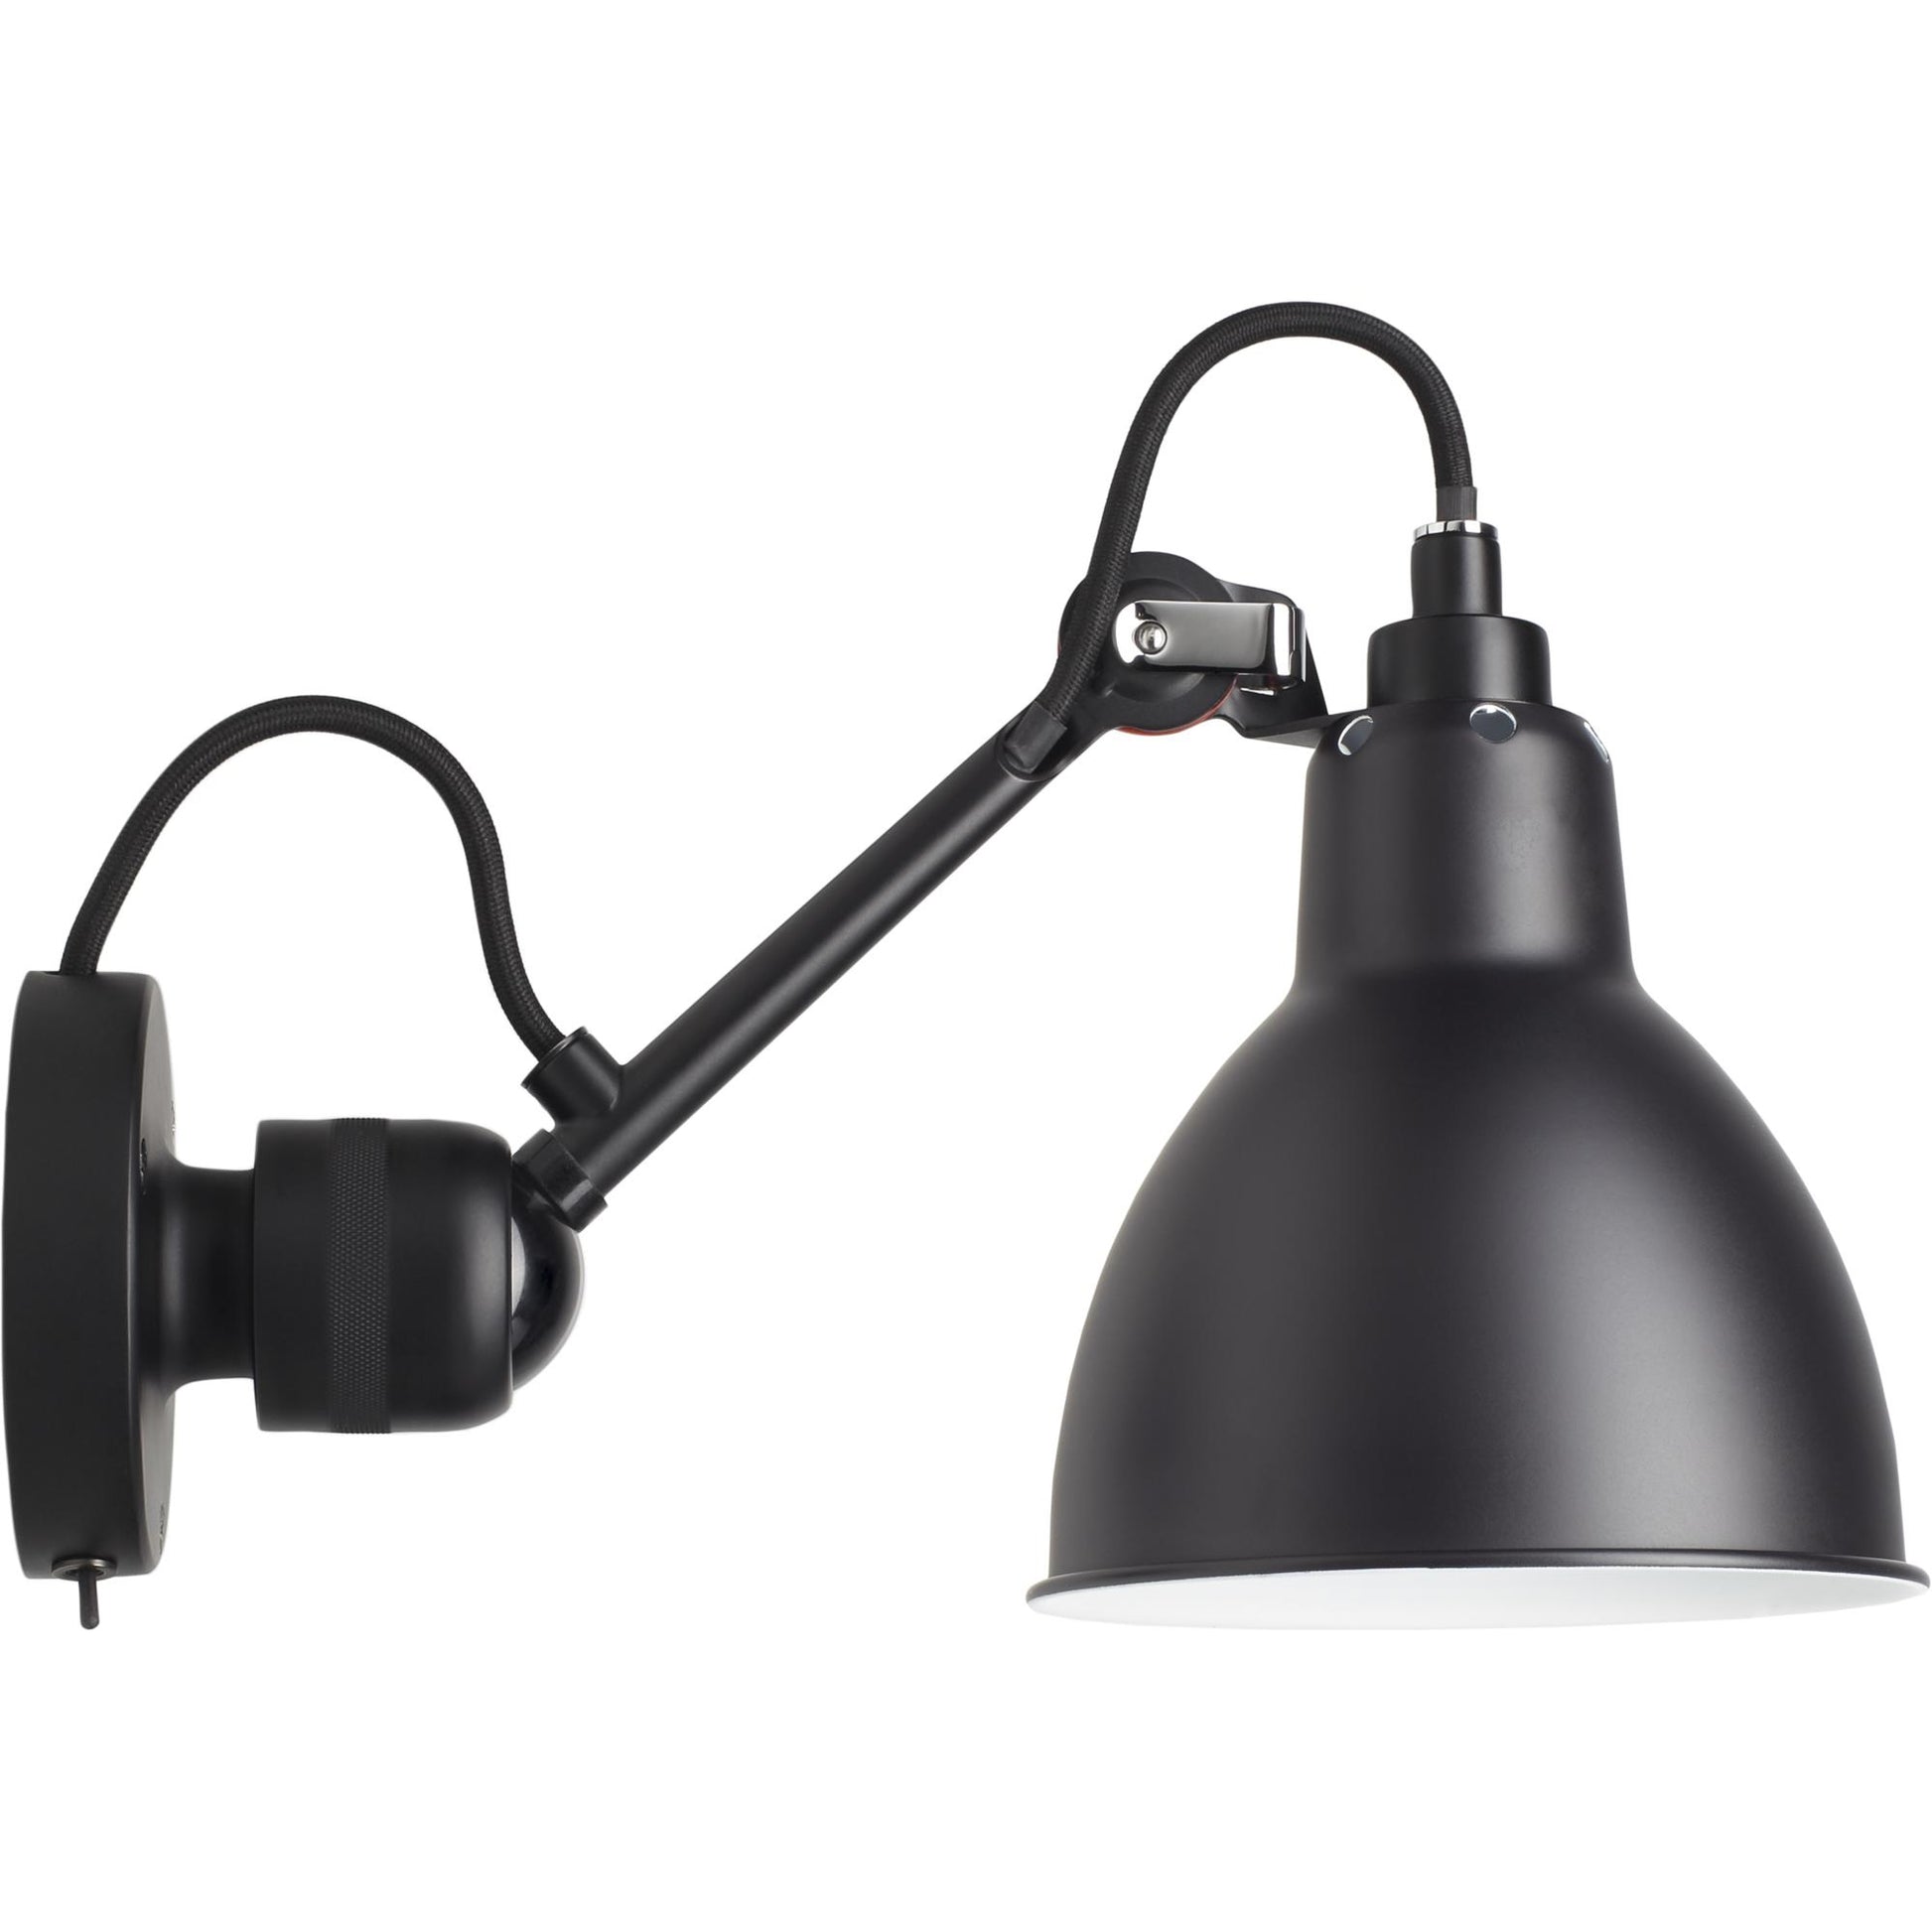 N304 Wall Lamp by Lampe Gras #Mat Black w. Switch